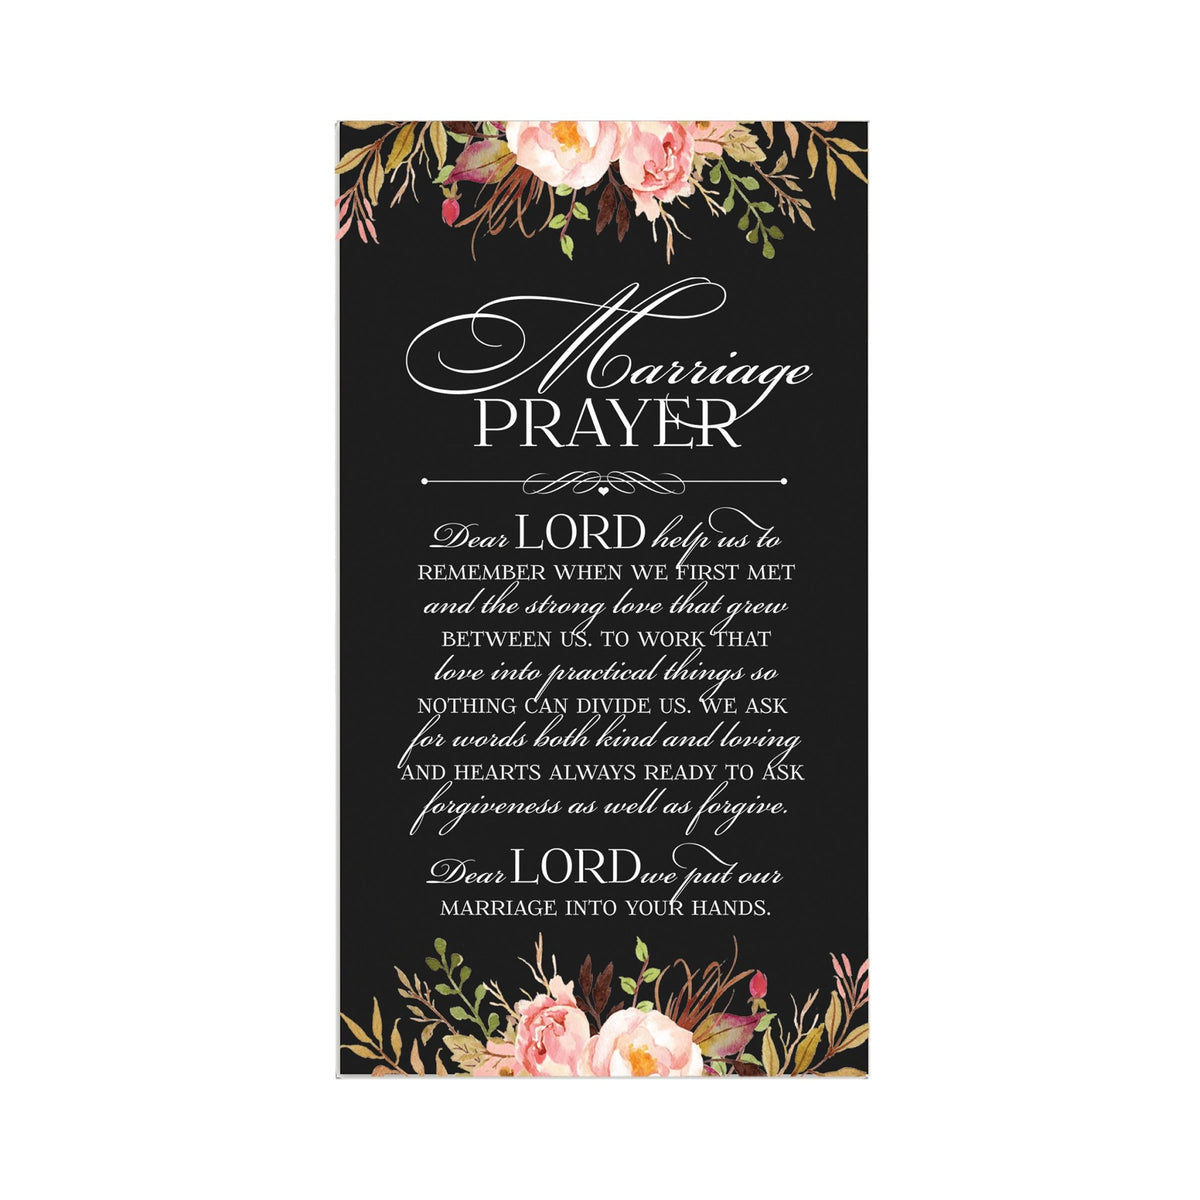 Inspiring Wedding Anniversary Wall Hanging Plaque 8x16 - Marriage Prayer - LifeSong Milestones